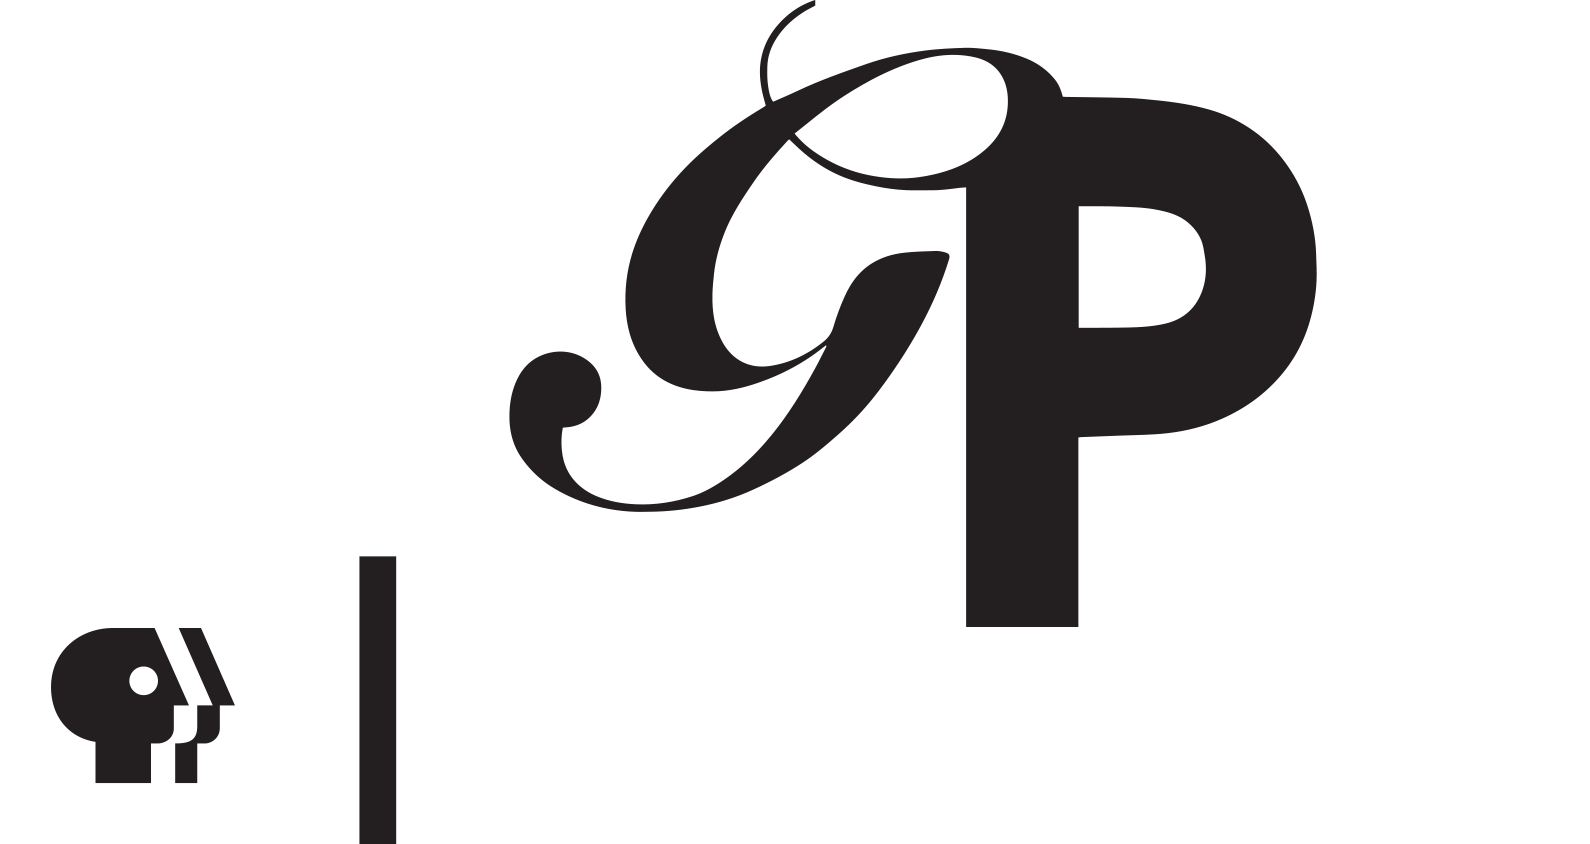 Great Performances - Great Performances (1590x844)